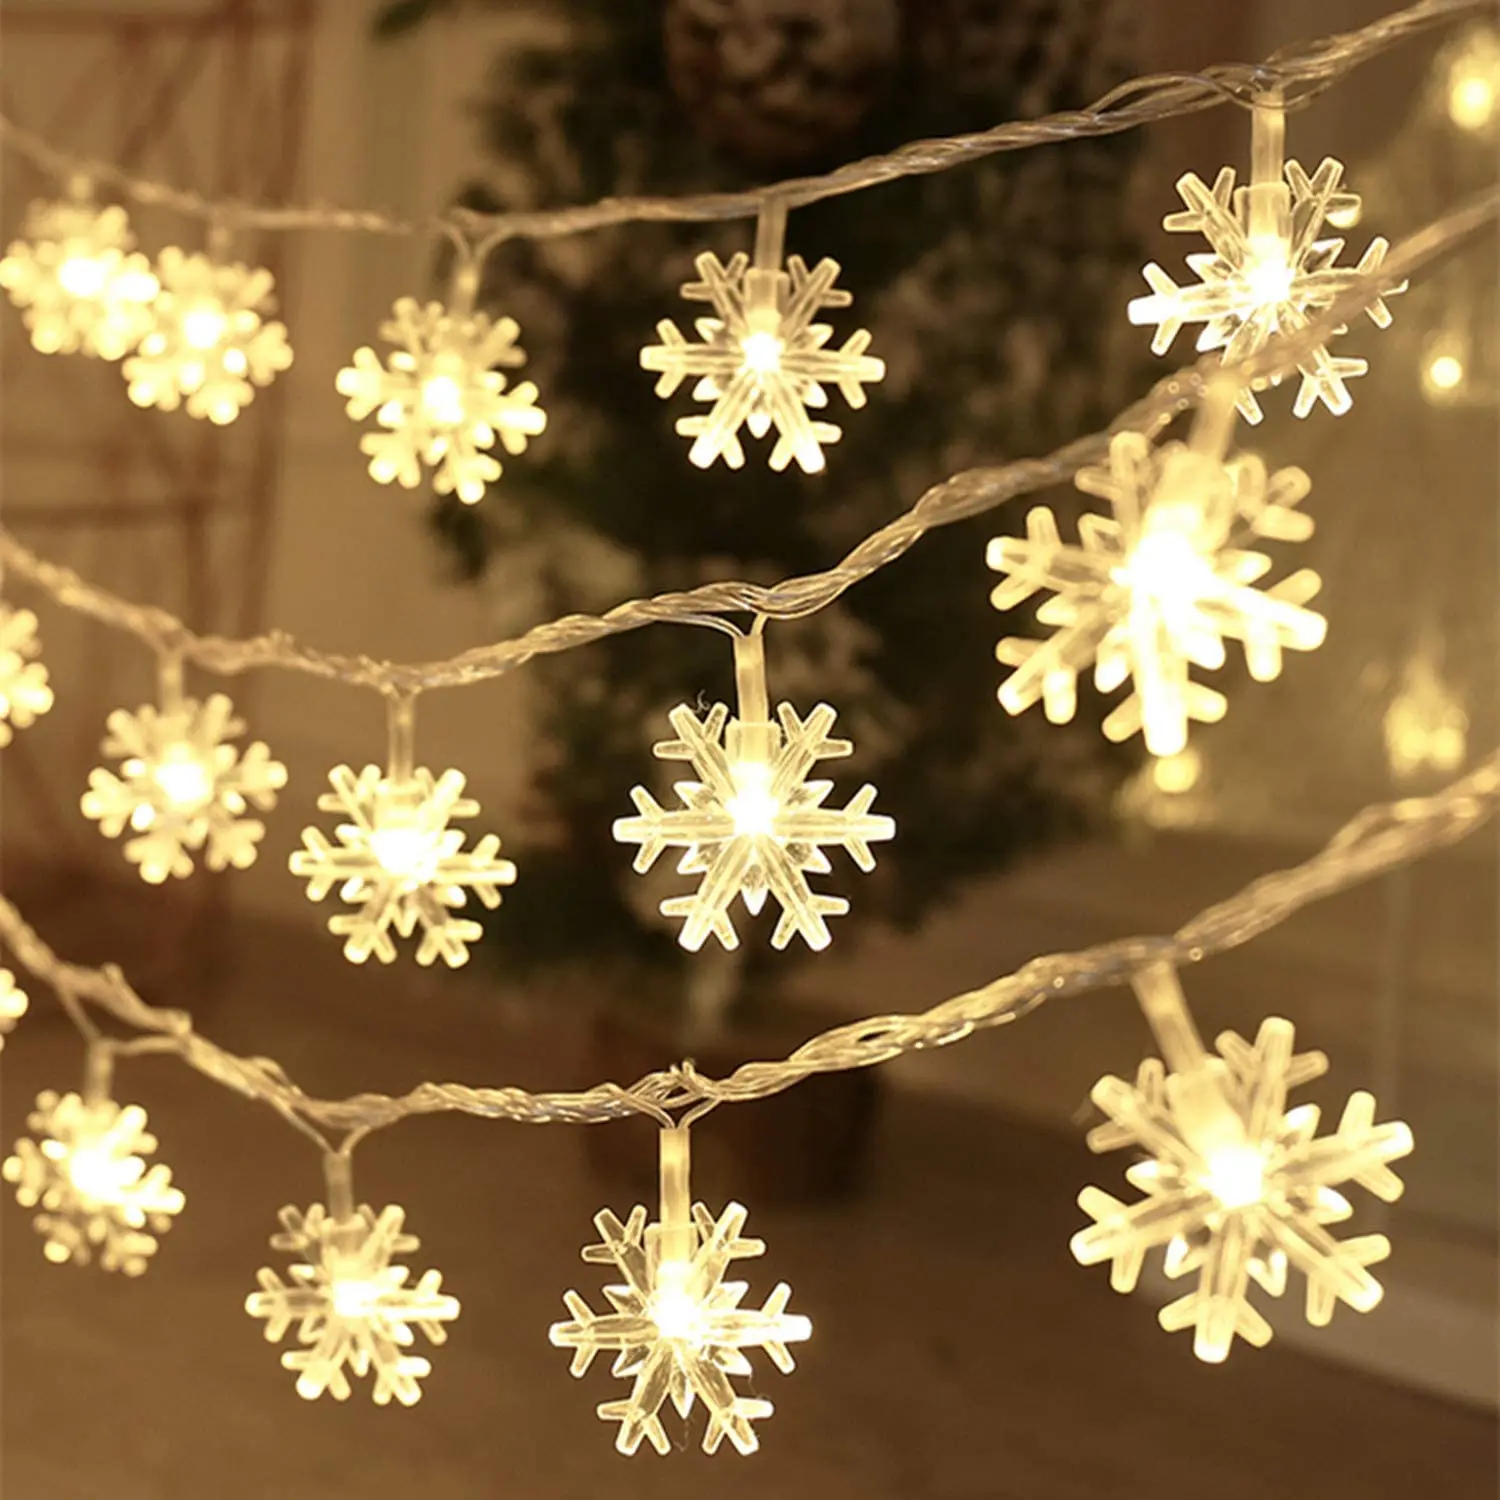 LED Garland Holiday Snowflakes String Fairy Lights Hanging Decor Christmas L5O6 